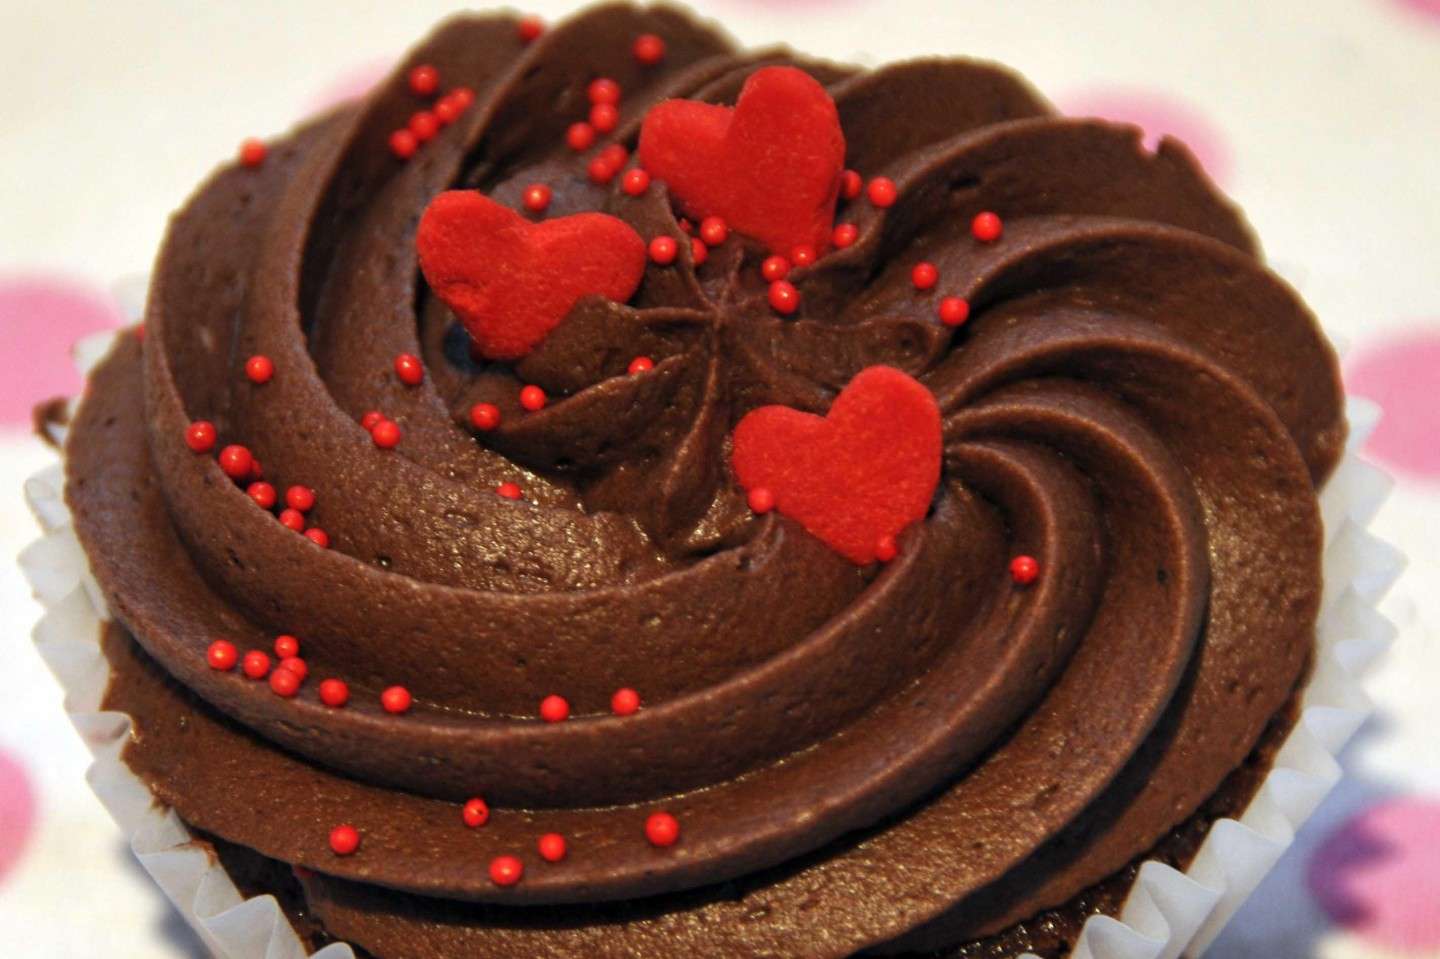 Cupcake per San Valentino